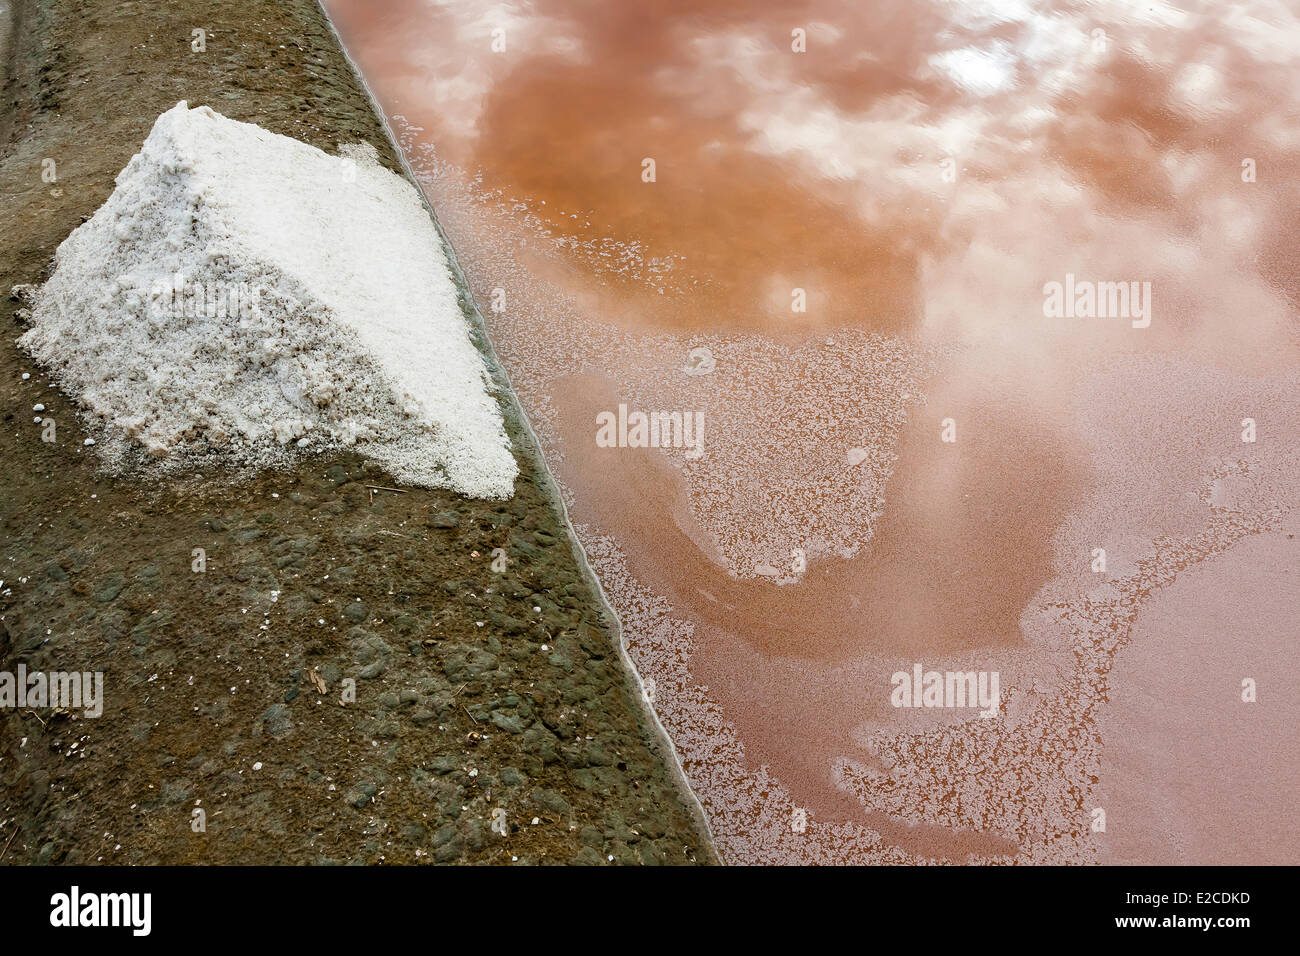 France, Vendee, L'Ile d'Olonne, the salt marshe, heap of salt and salt flower Stock Photo